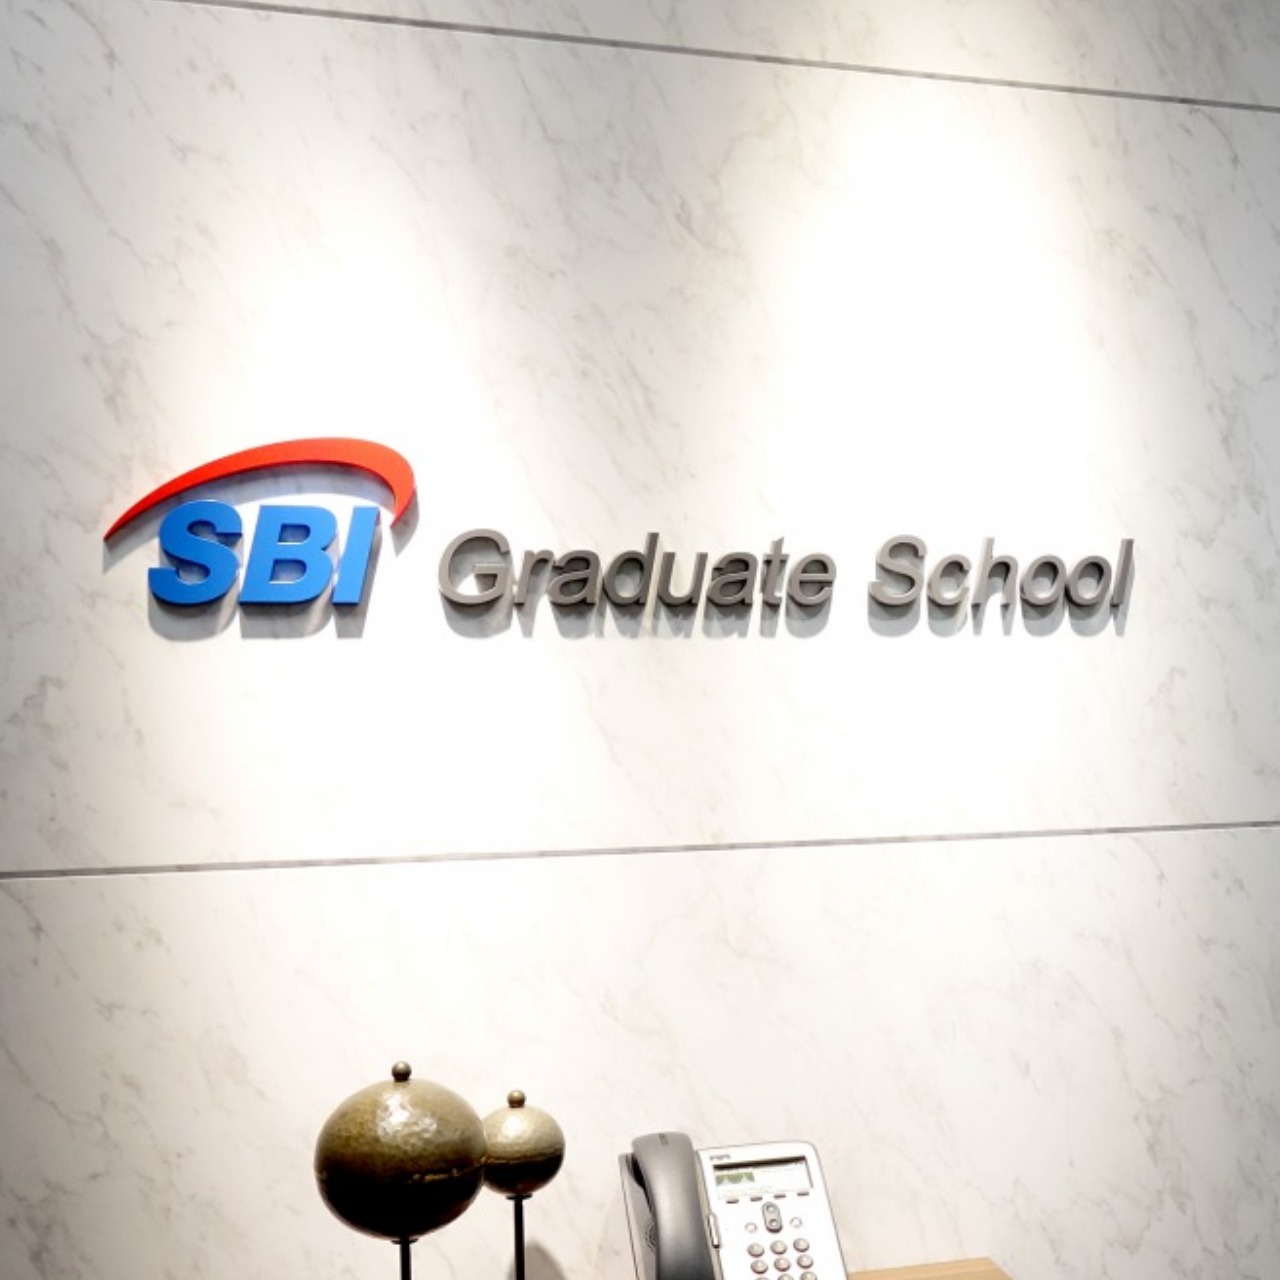 SBI Graduate School